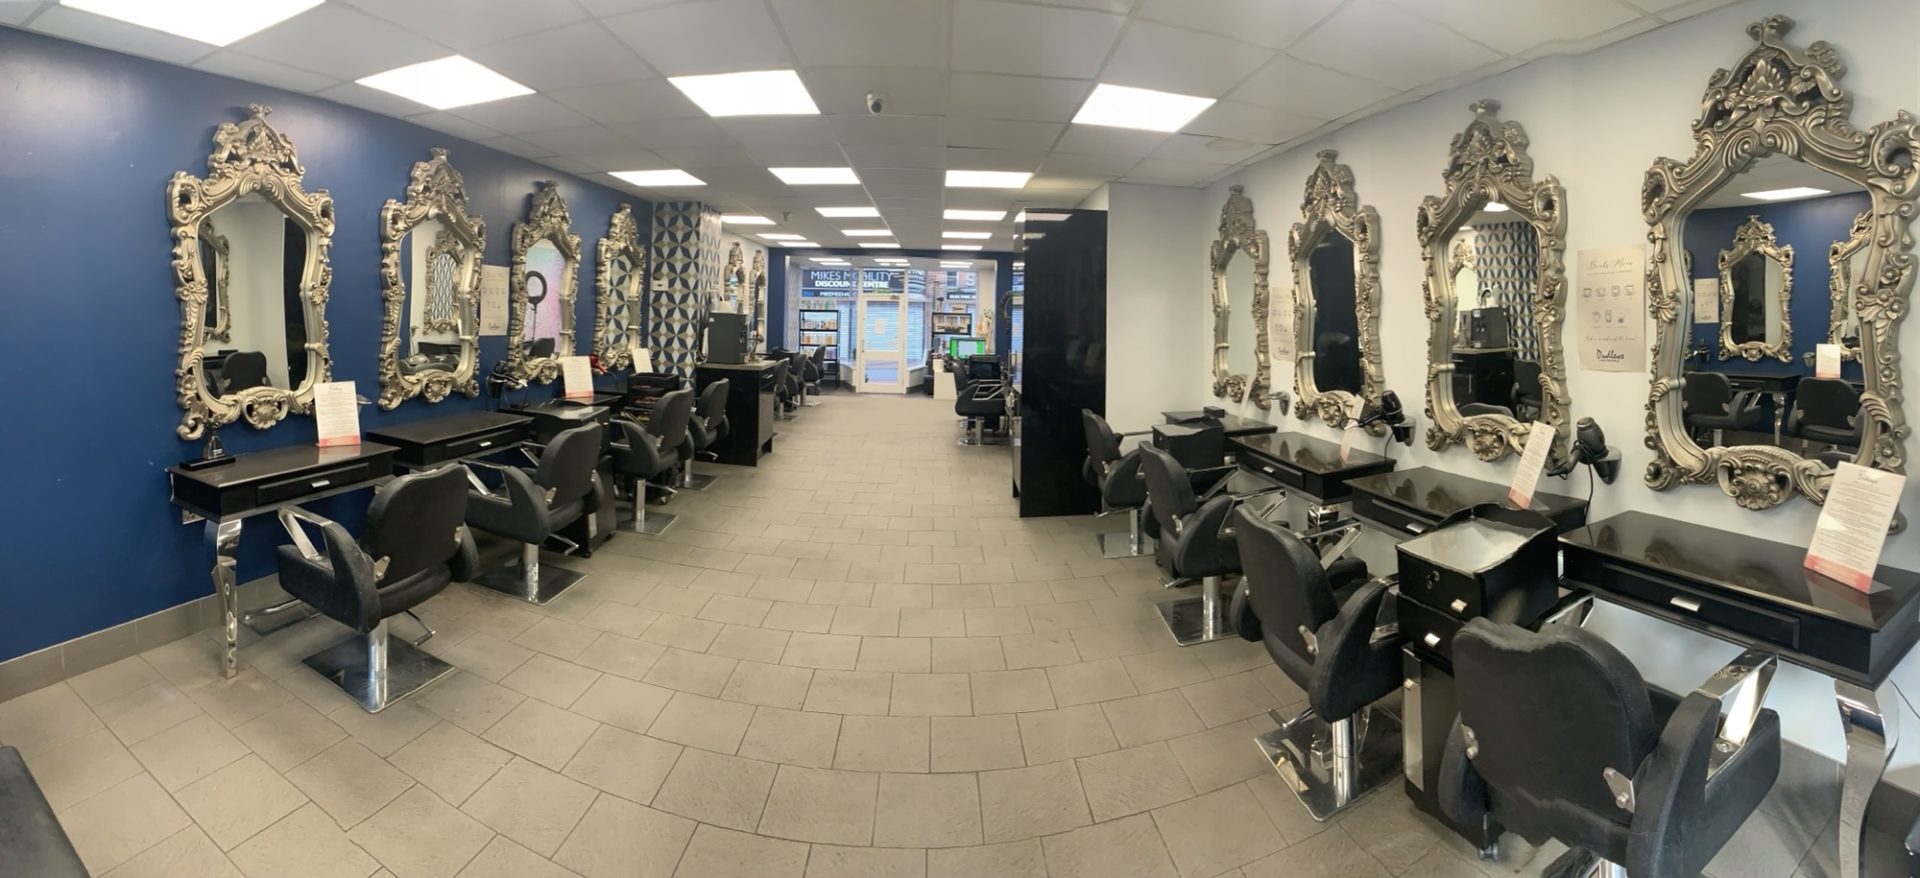 Inside Dudleys Hair Beauty Salon in Bulwell Nottingham